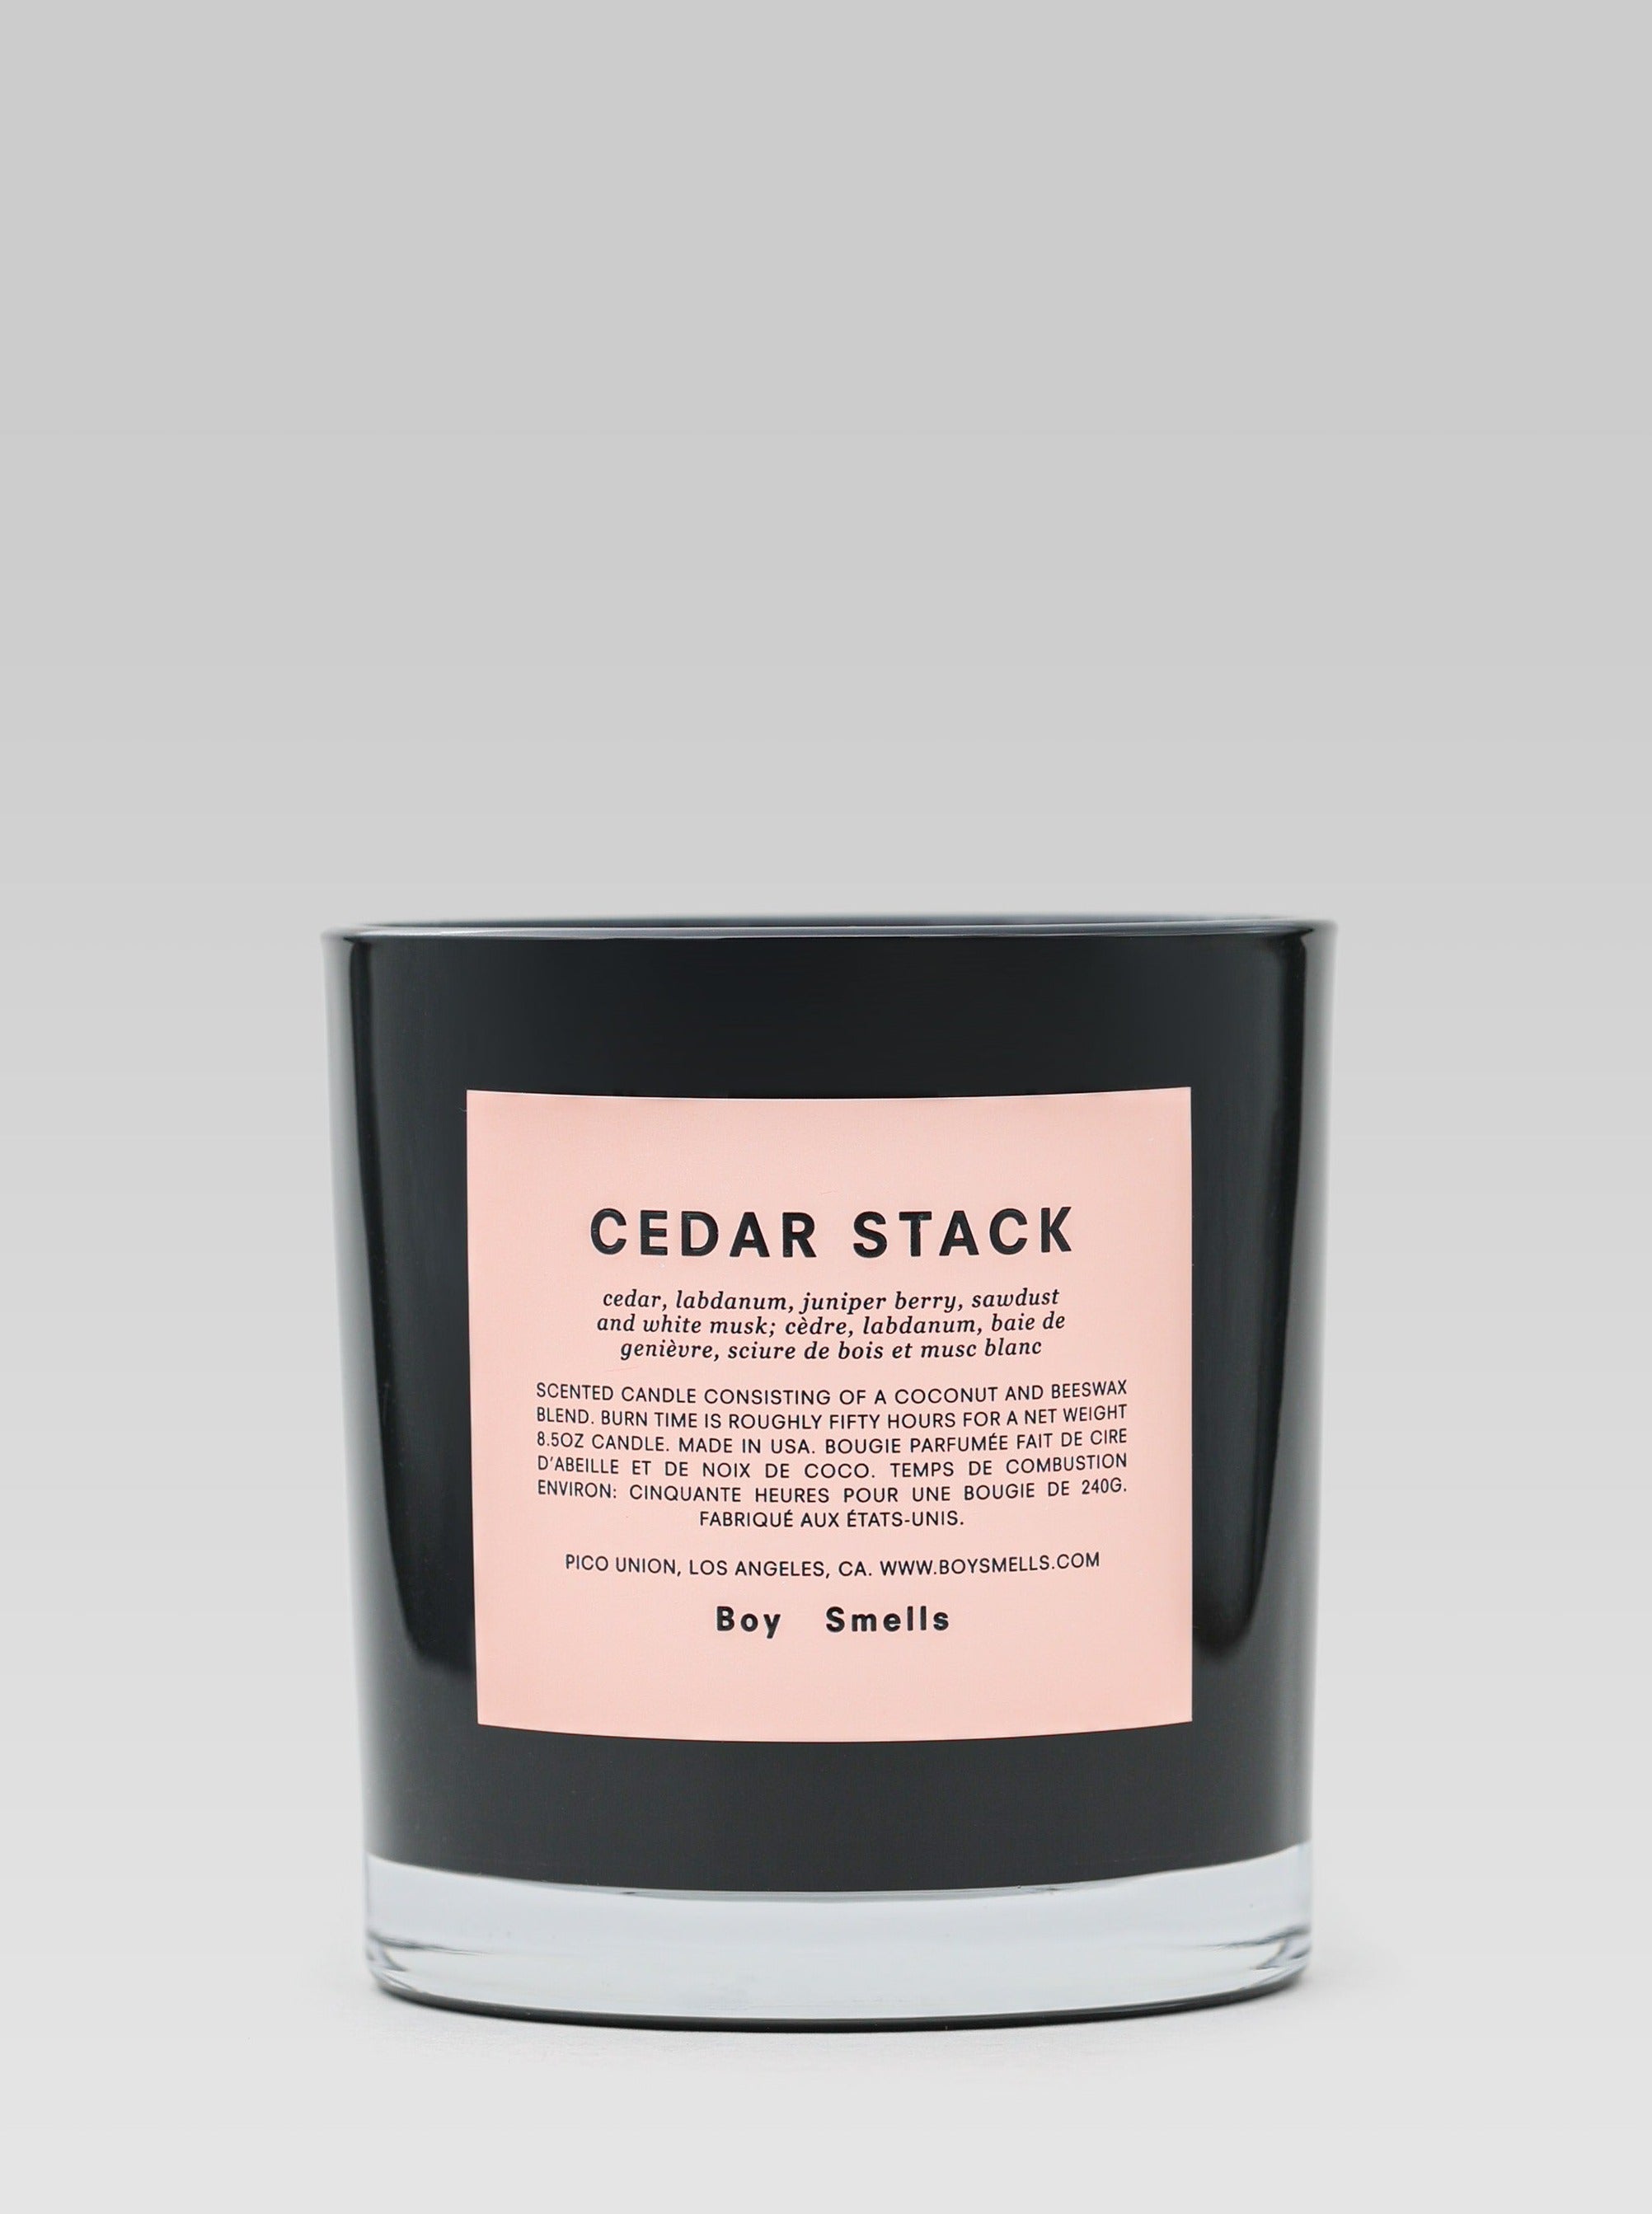 Boy Smells Cedar Stack Candle product shot